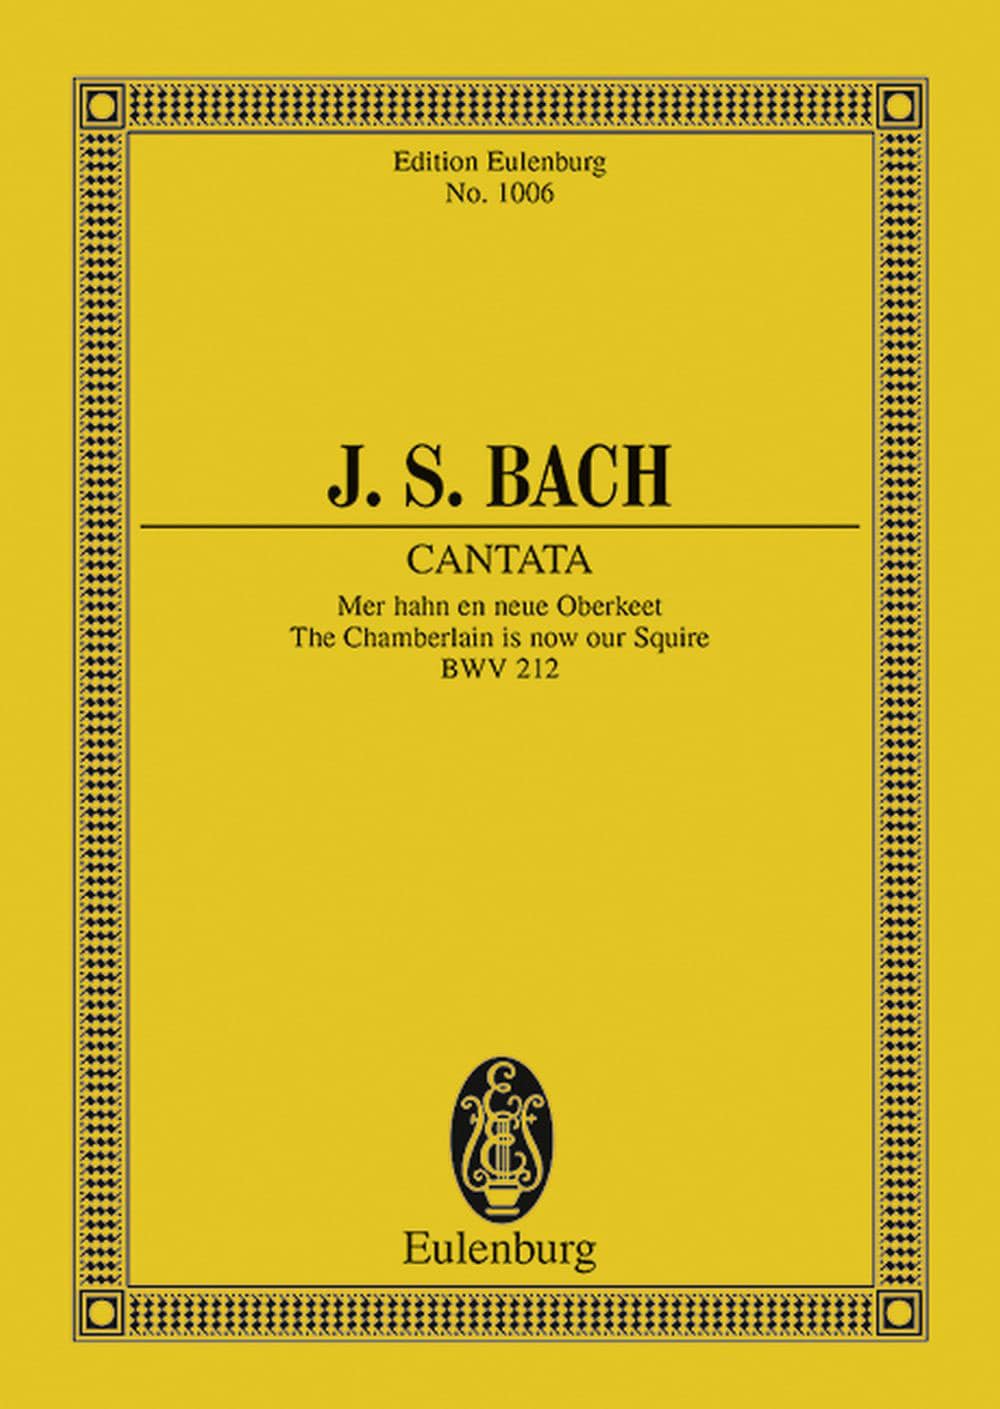 EULENBURG BACH J.S. - CANTATA NO.212 BWV 212 - 2 SOLO PARTS, CHOIR AND CHAMBER ORCHESTRA